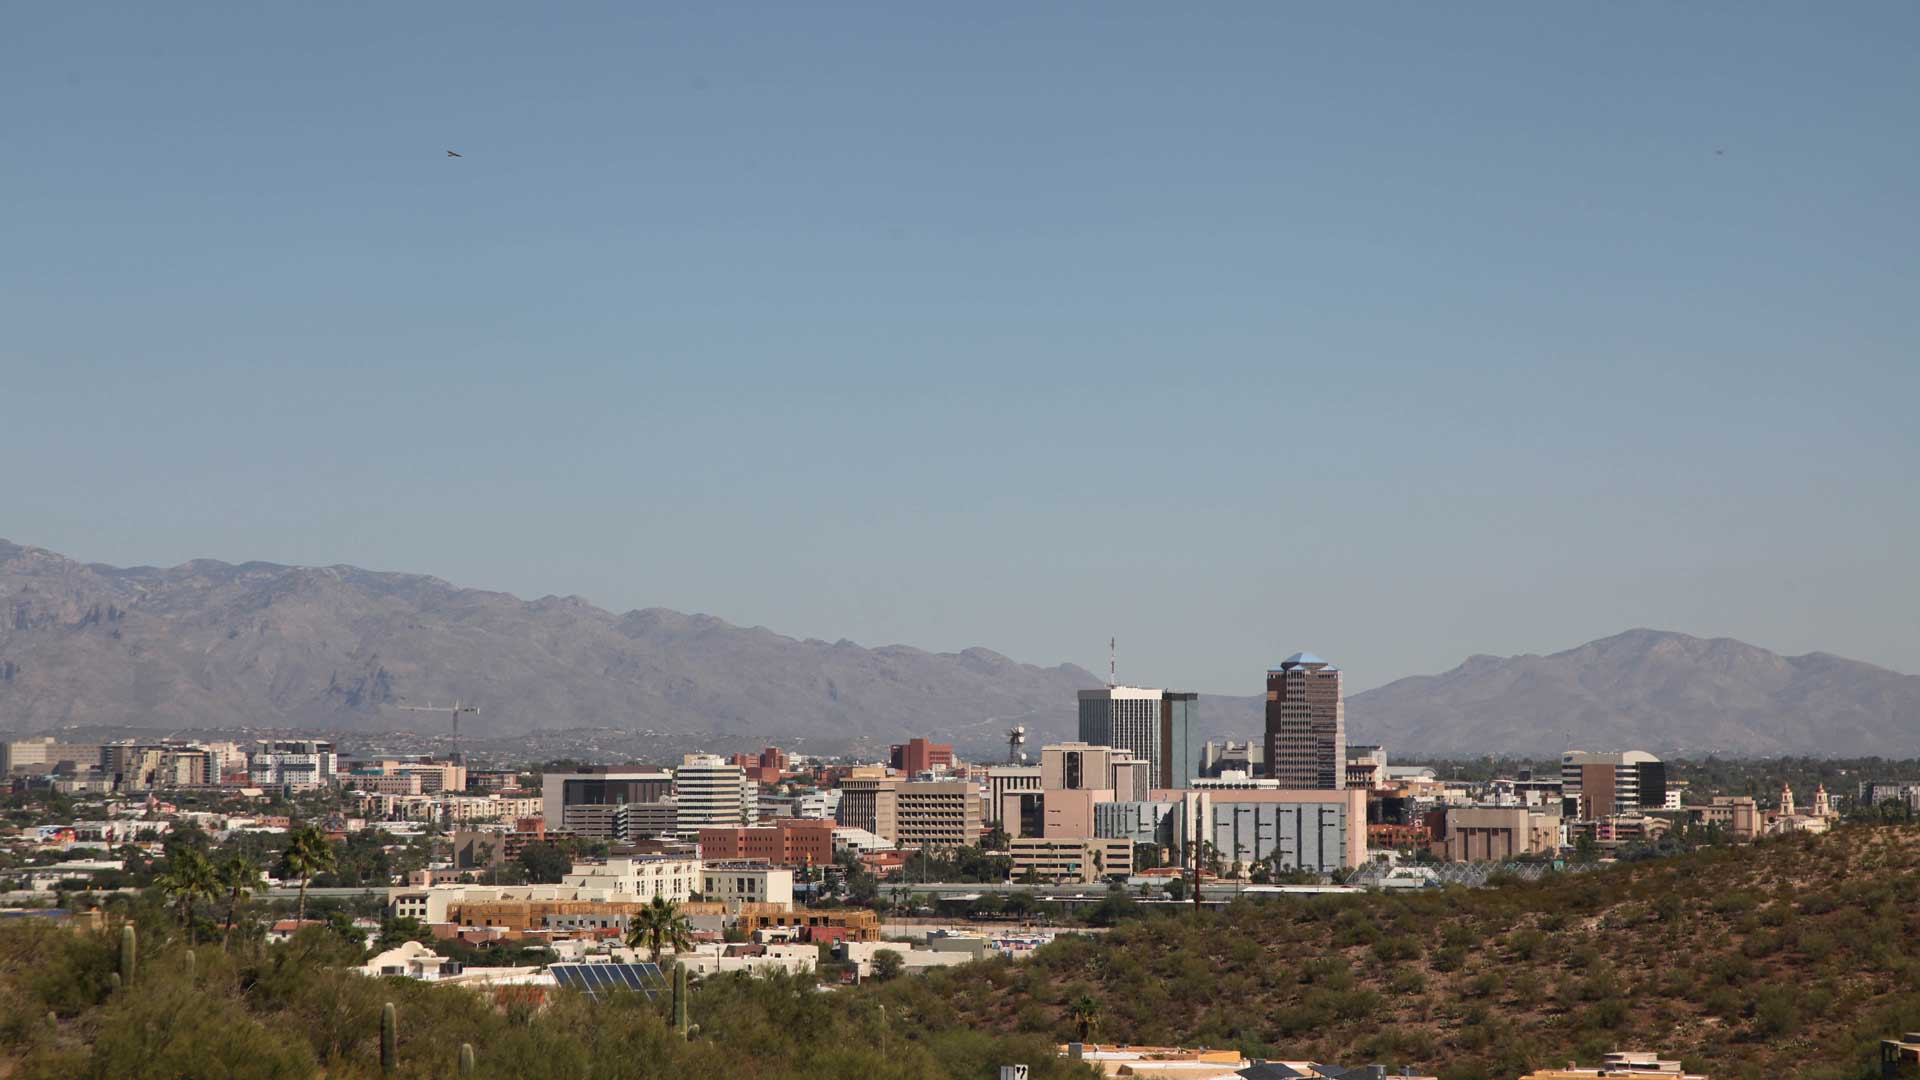 The Tucson Skyline. October 23, 2019.